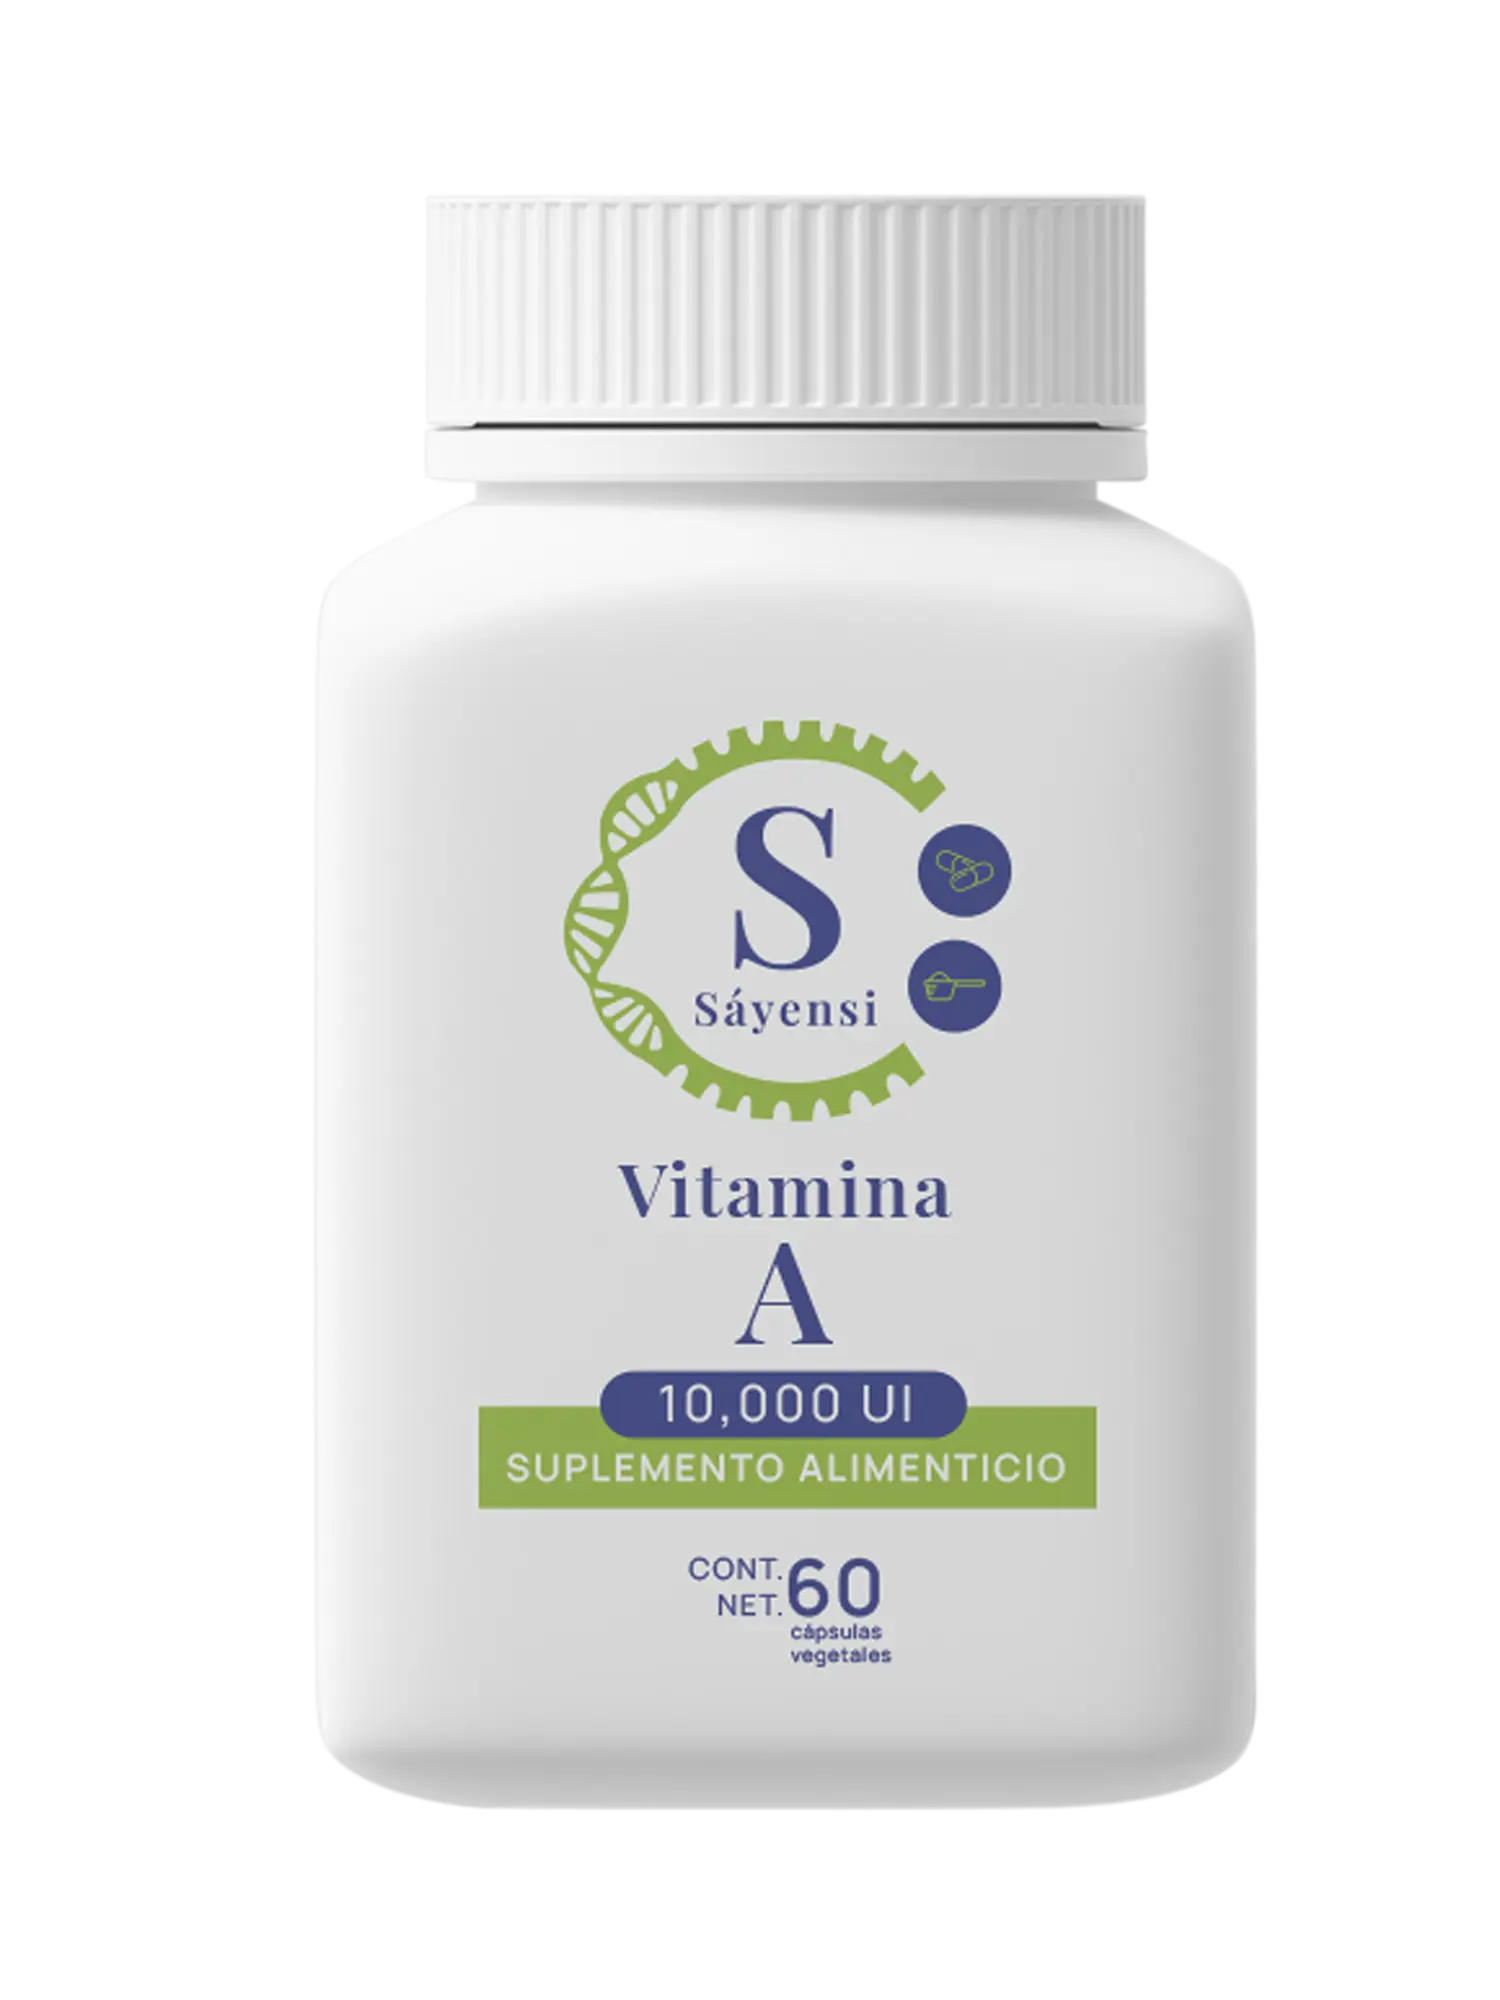 Vitamina A Sáyensi - 10,000 UI - PURESUPPLY